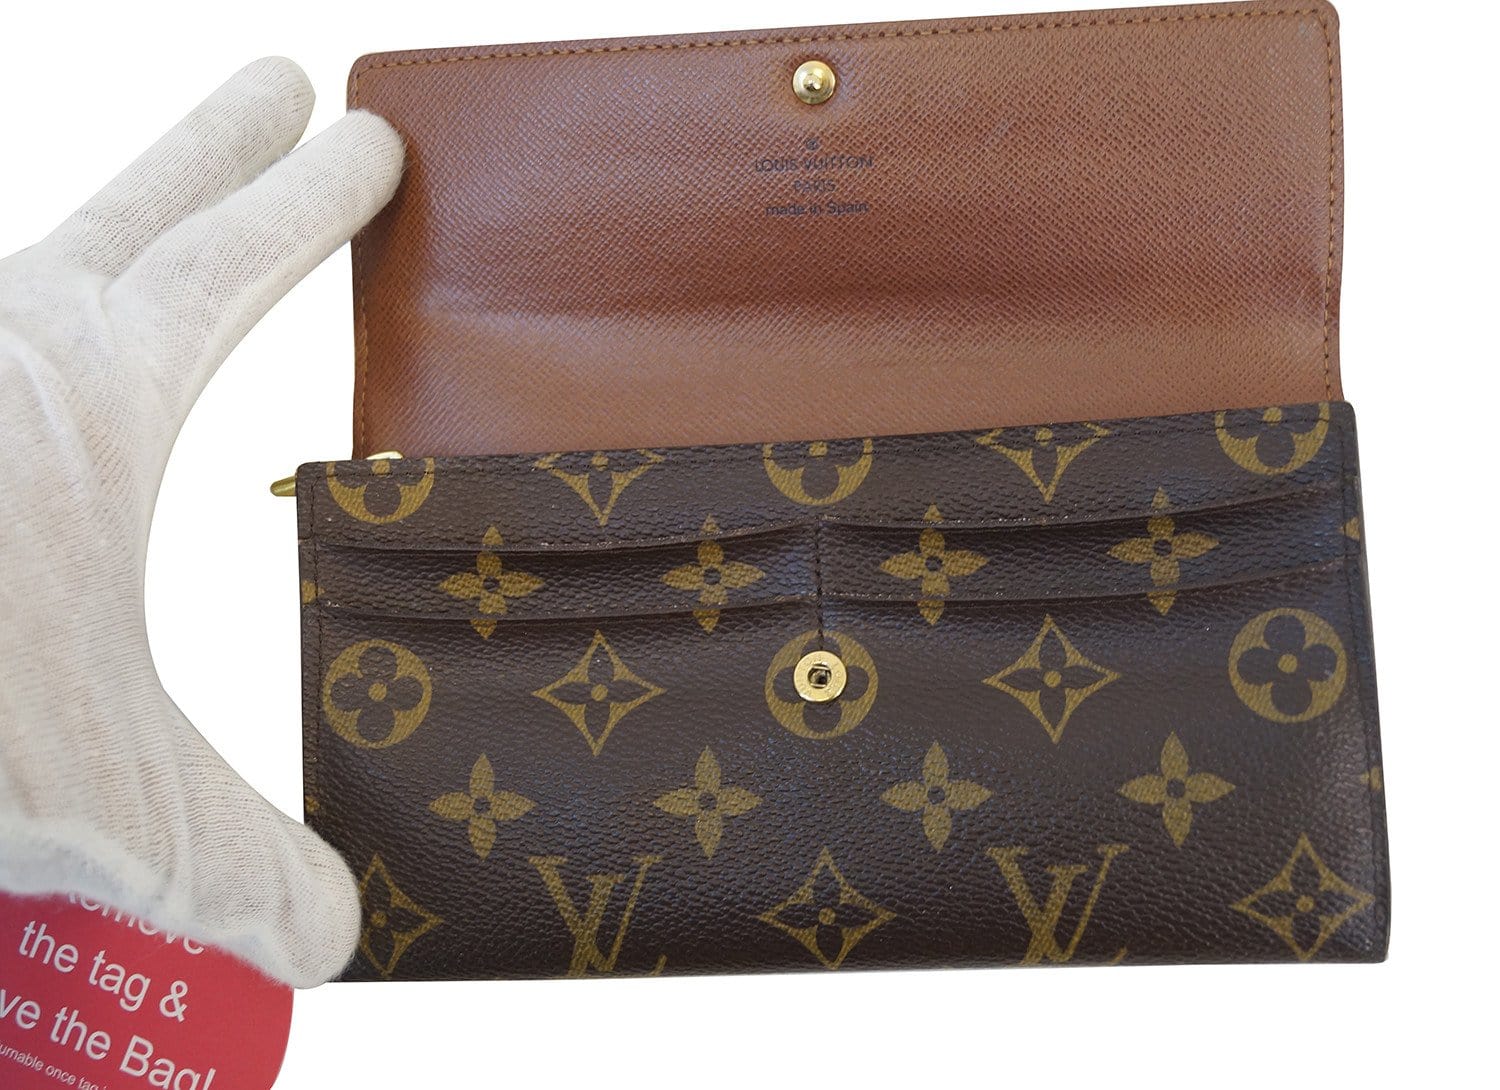 Shop Louis Vuitton PORTEFEUILLE SARAH 2020-21FW Sarah wallet